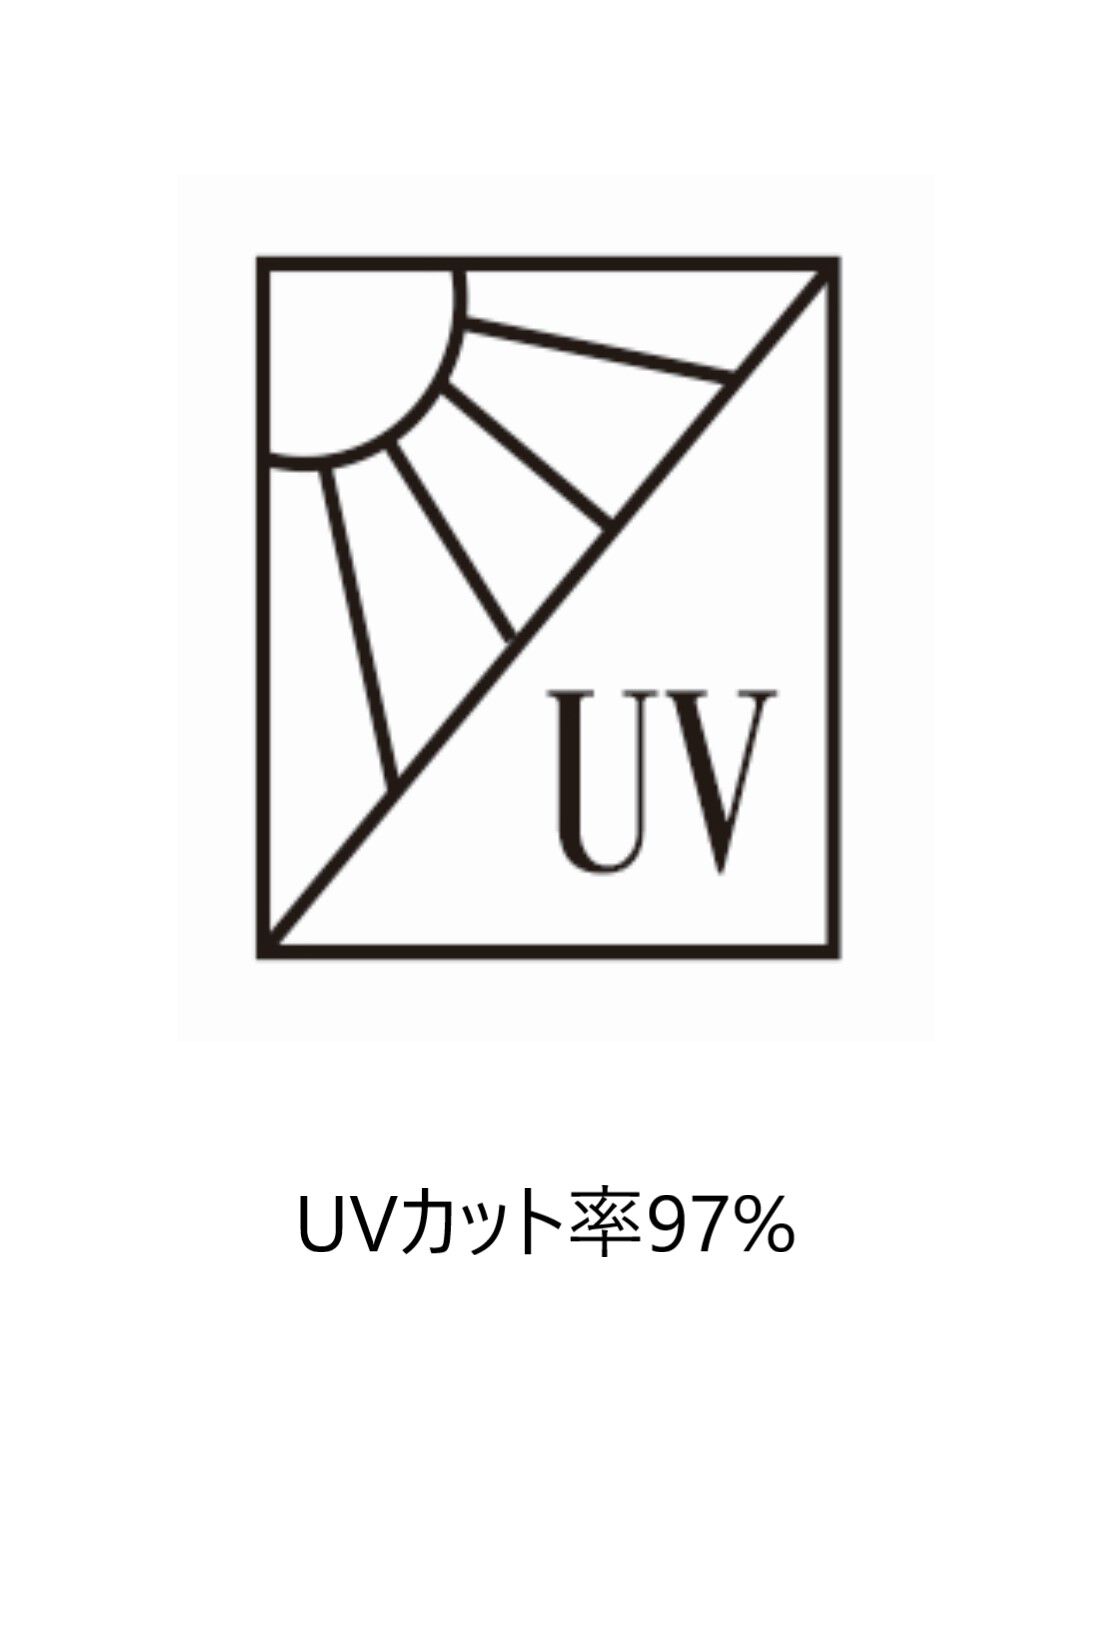 OSYAIRO|OSYAIRO　UVカットのキレイカラーマスク〈イエロー〉|UVカット率97%